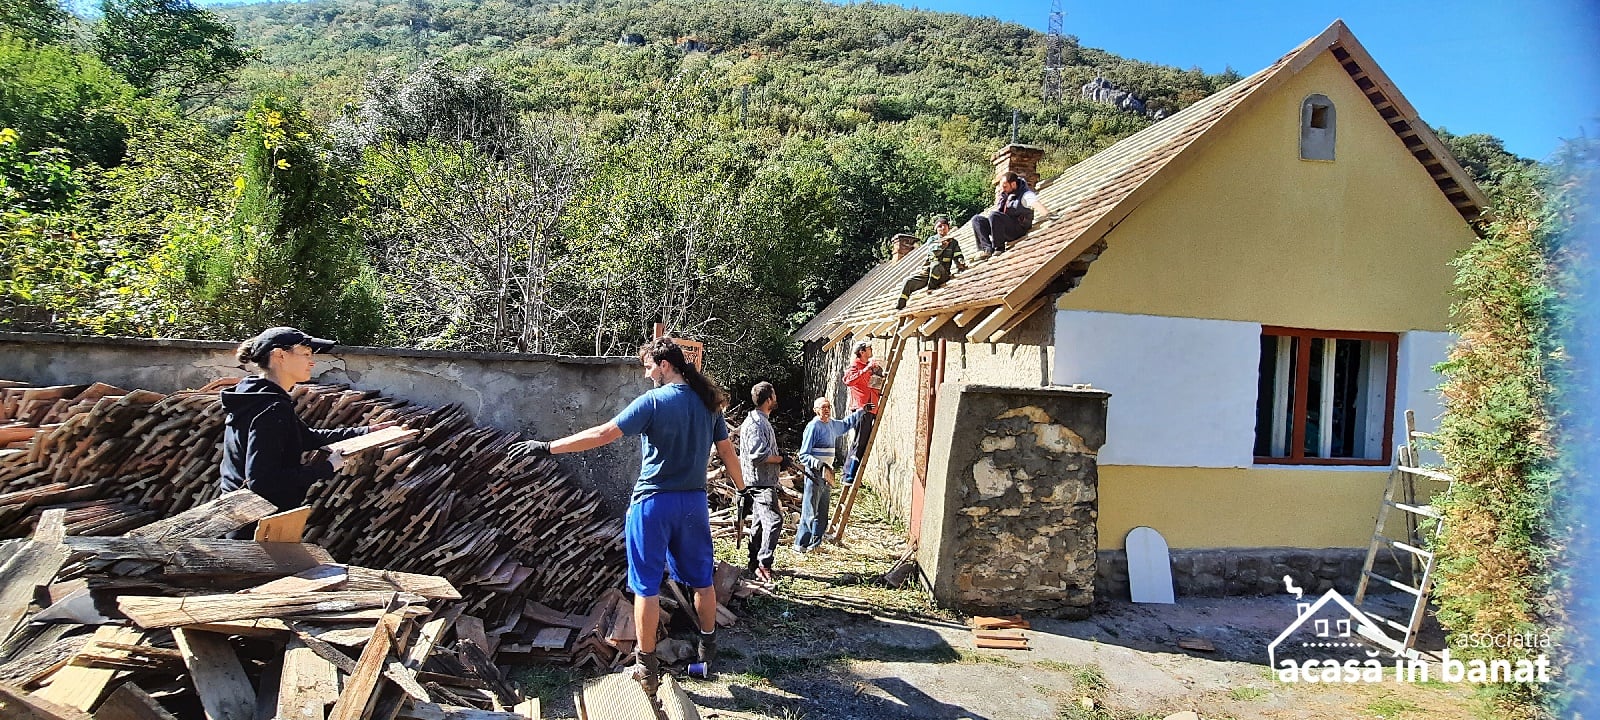 acasa in banata sasca montana muzeu voluntari (11)